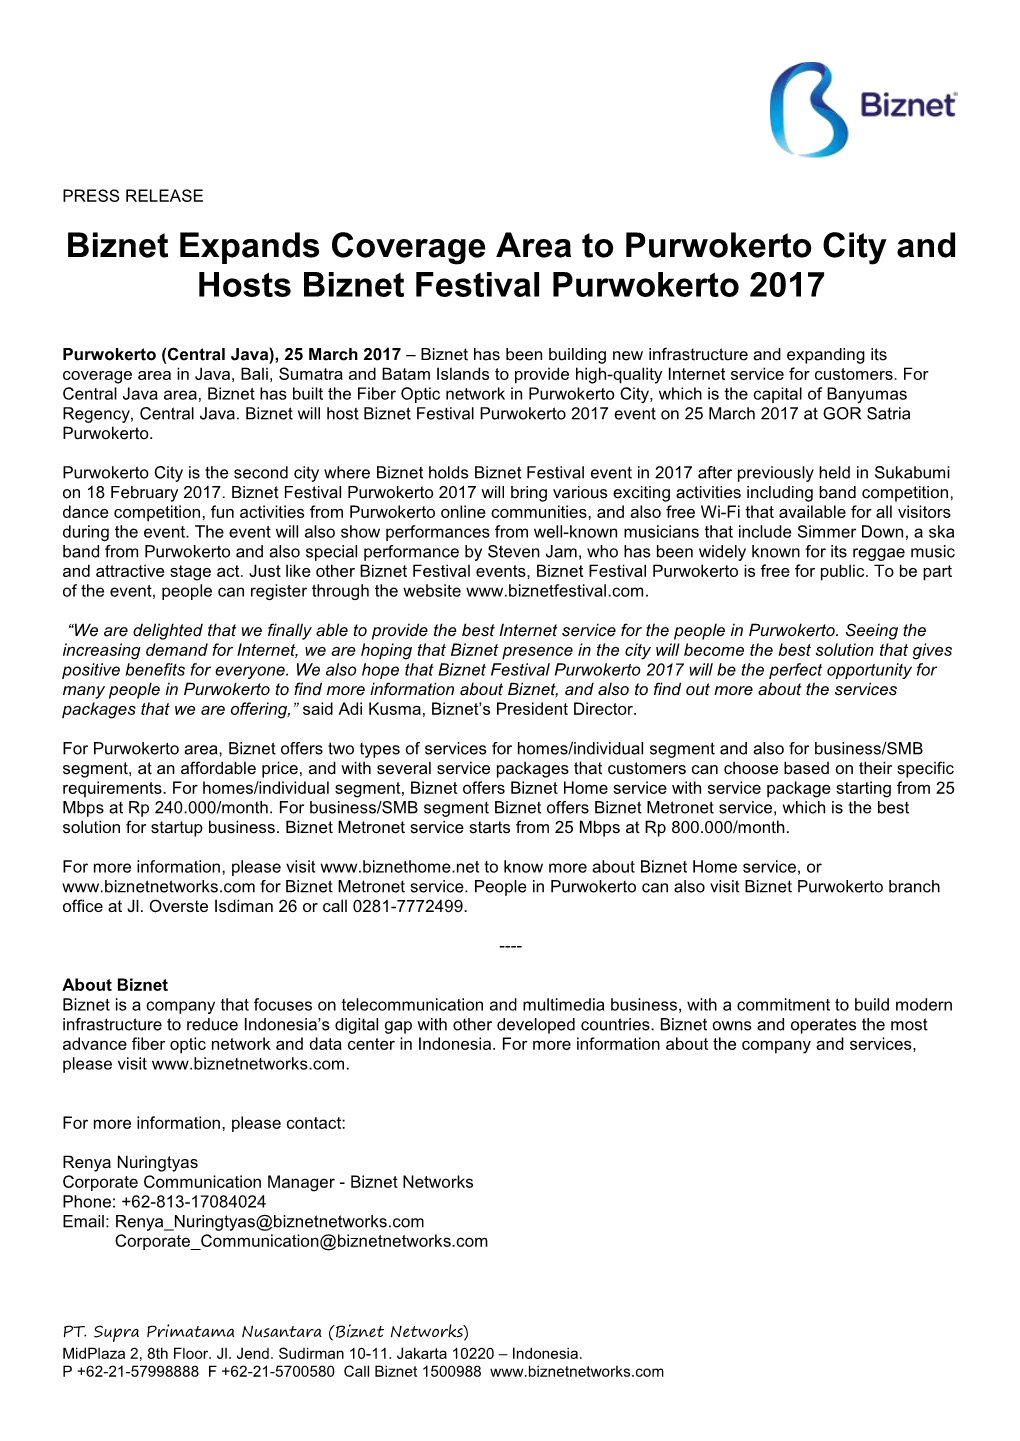 Biznet Expands Coverage Area to Purwokerto City and Hosts Biznet Festival Purwokerto 2017